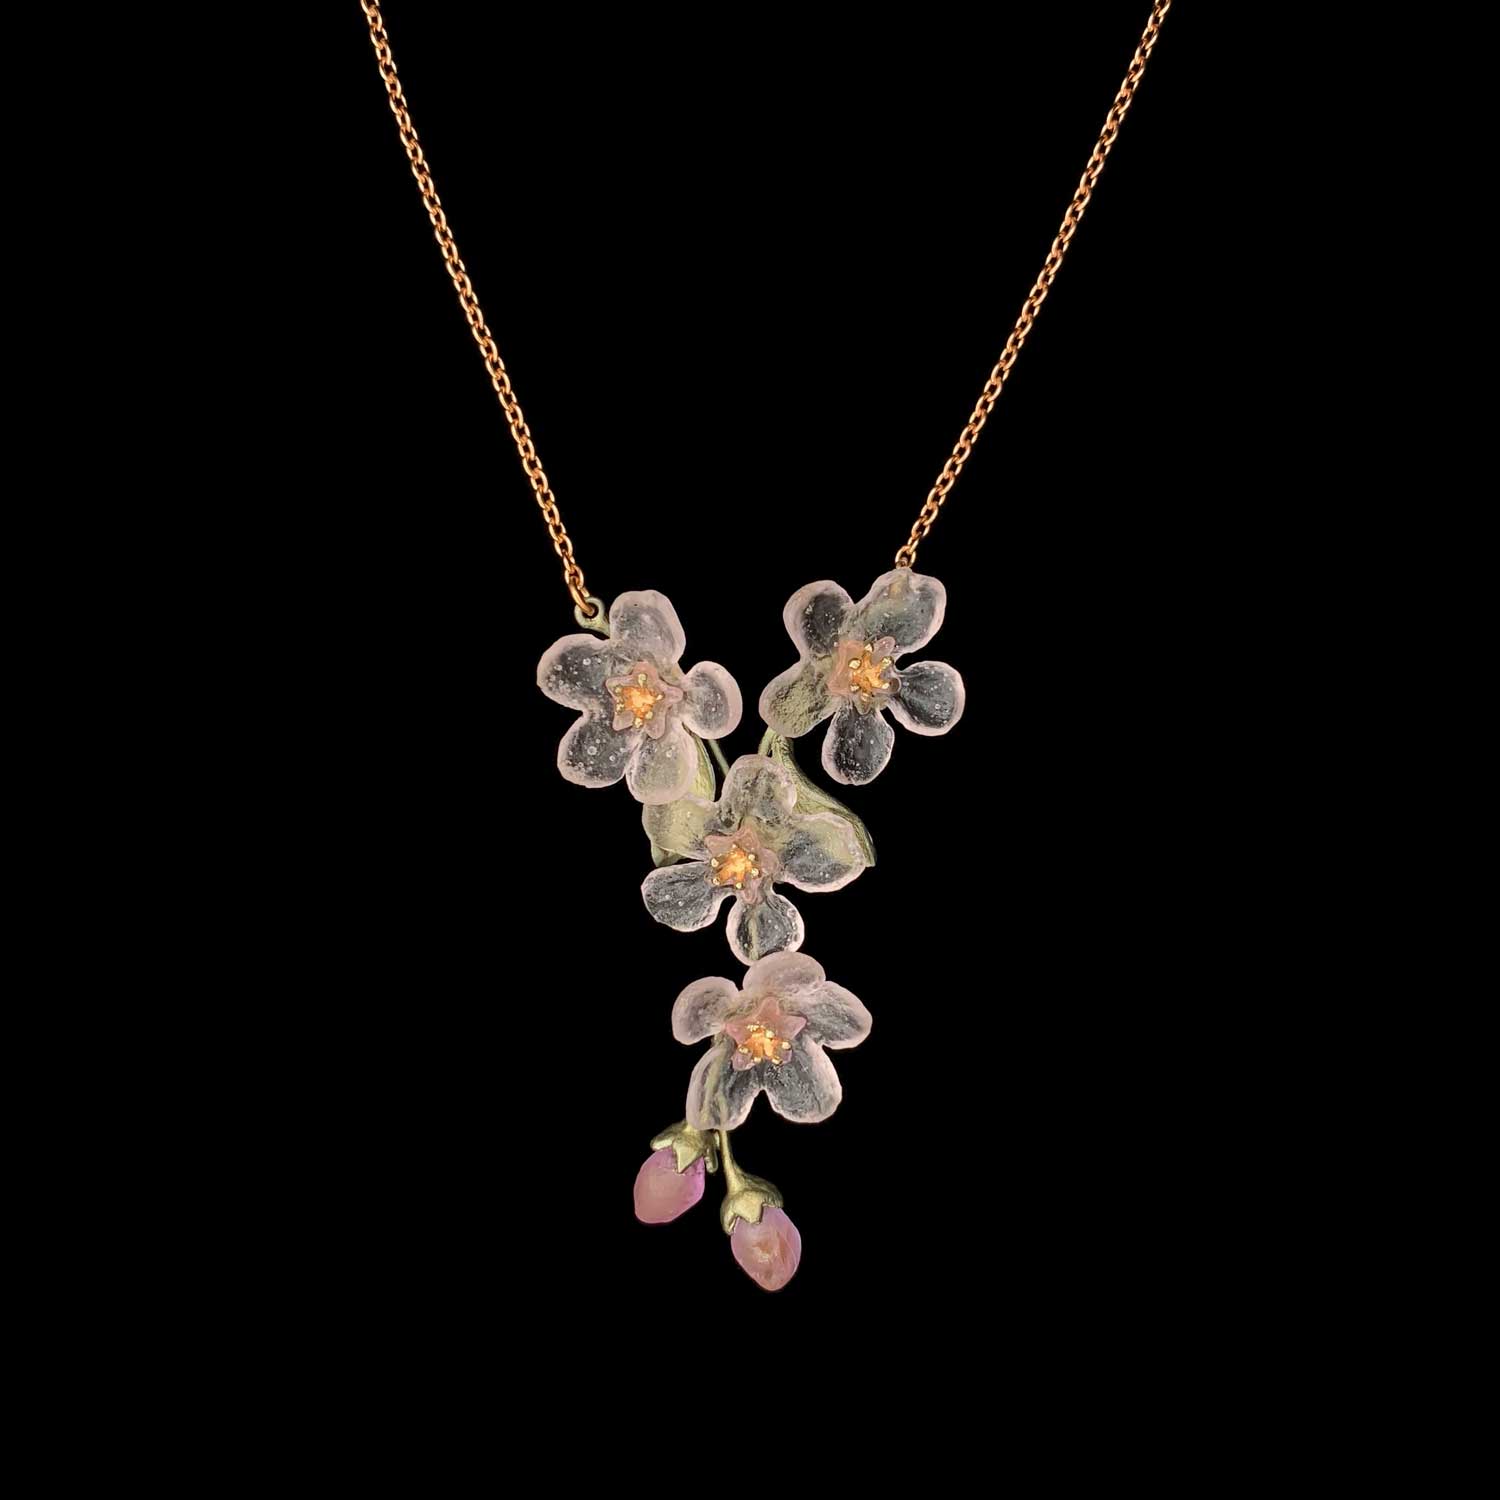 Peach Blossom Necklace - Flowers